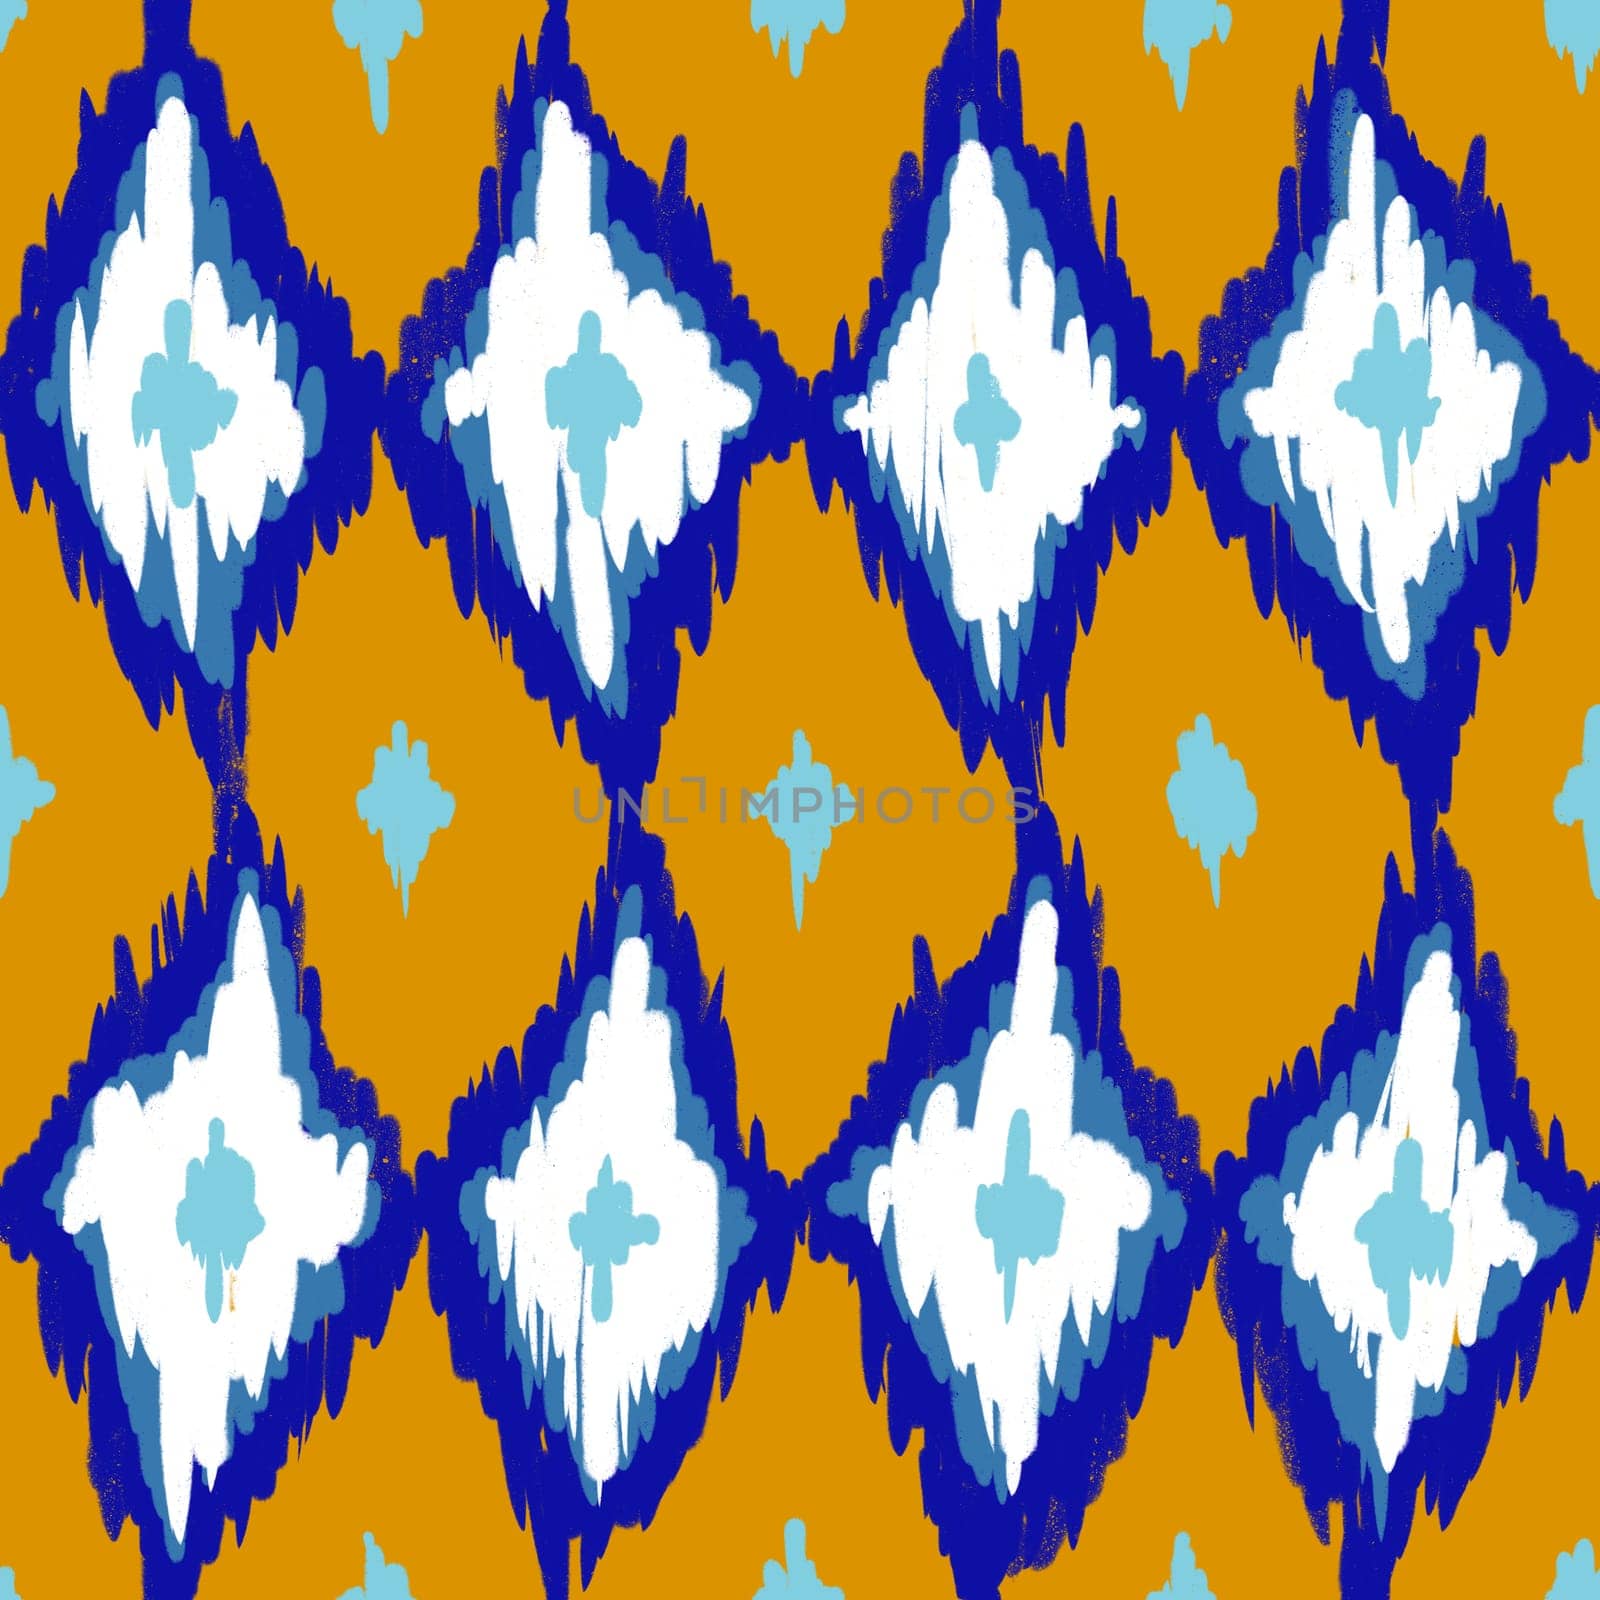 Hand drawn seamless pattern with ikat ethnic traditional indonesian fabric print. Blue indigo yellow mustard abstract geometric stripes lines design mid century modern splash stroke vibrant print with rhombus diamond shapes